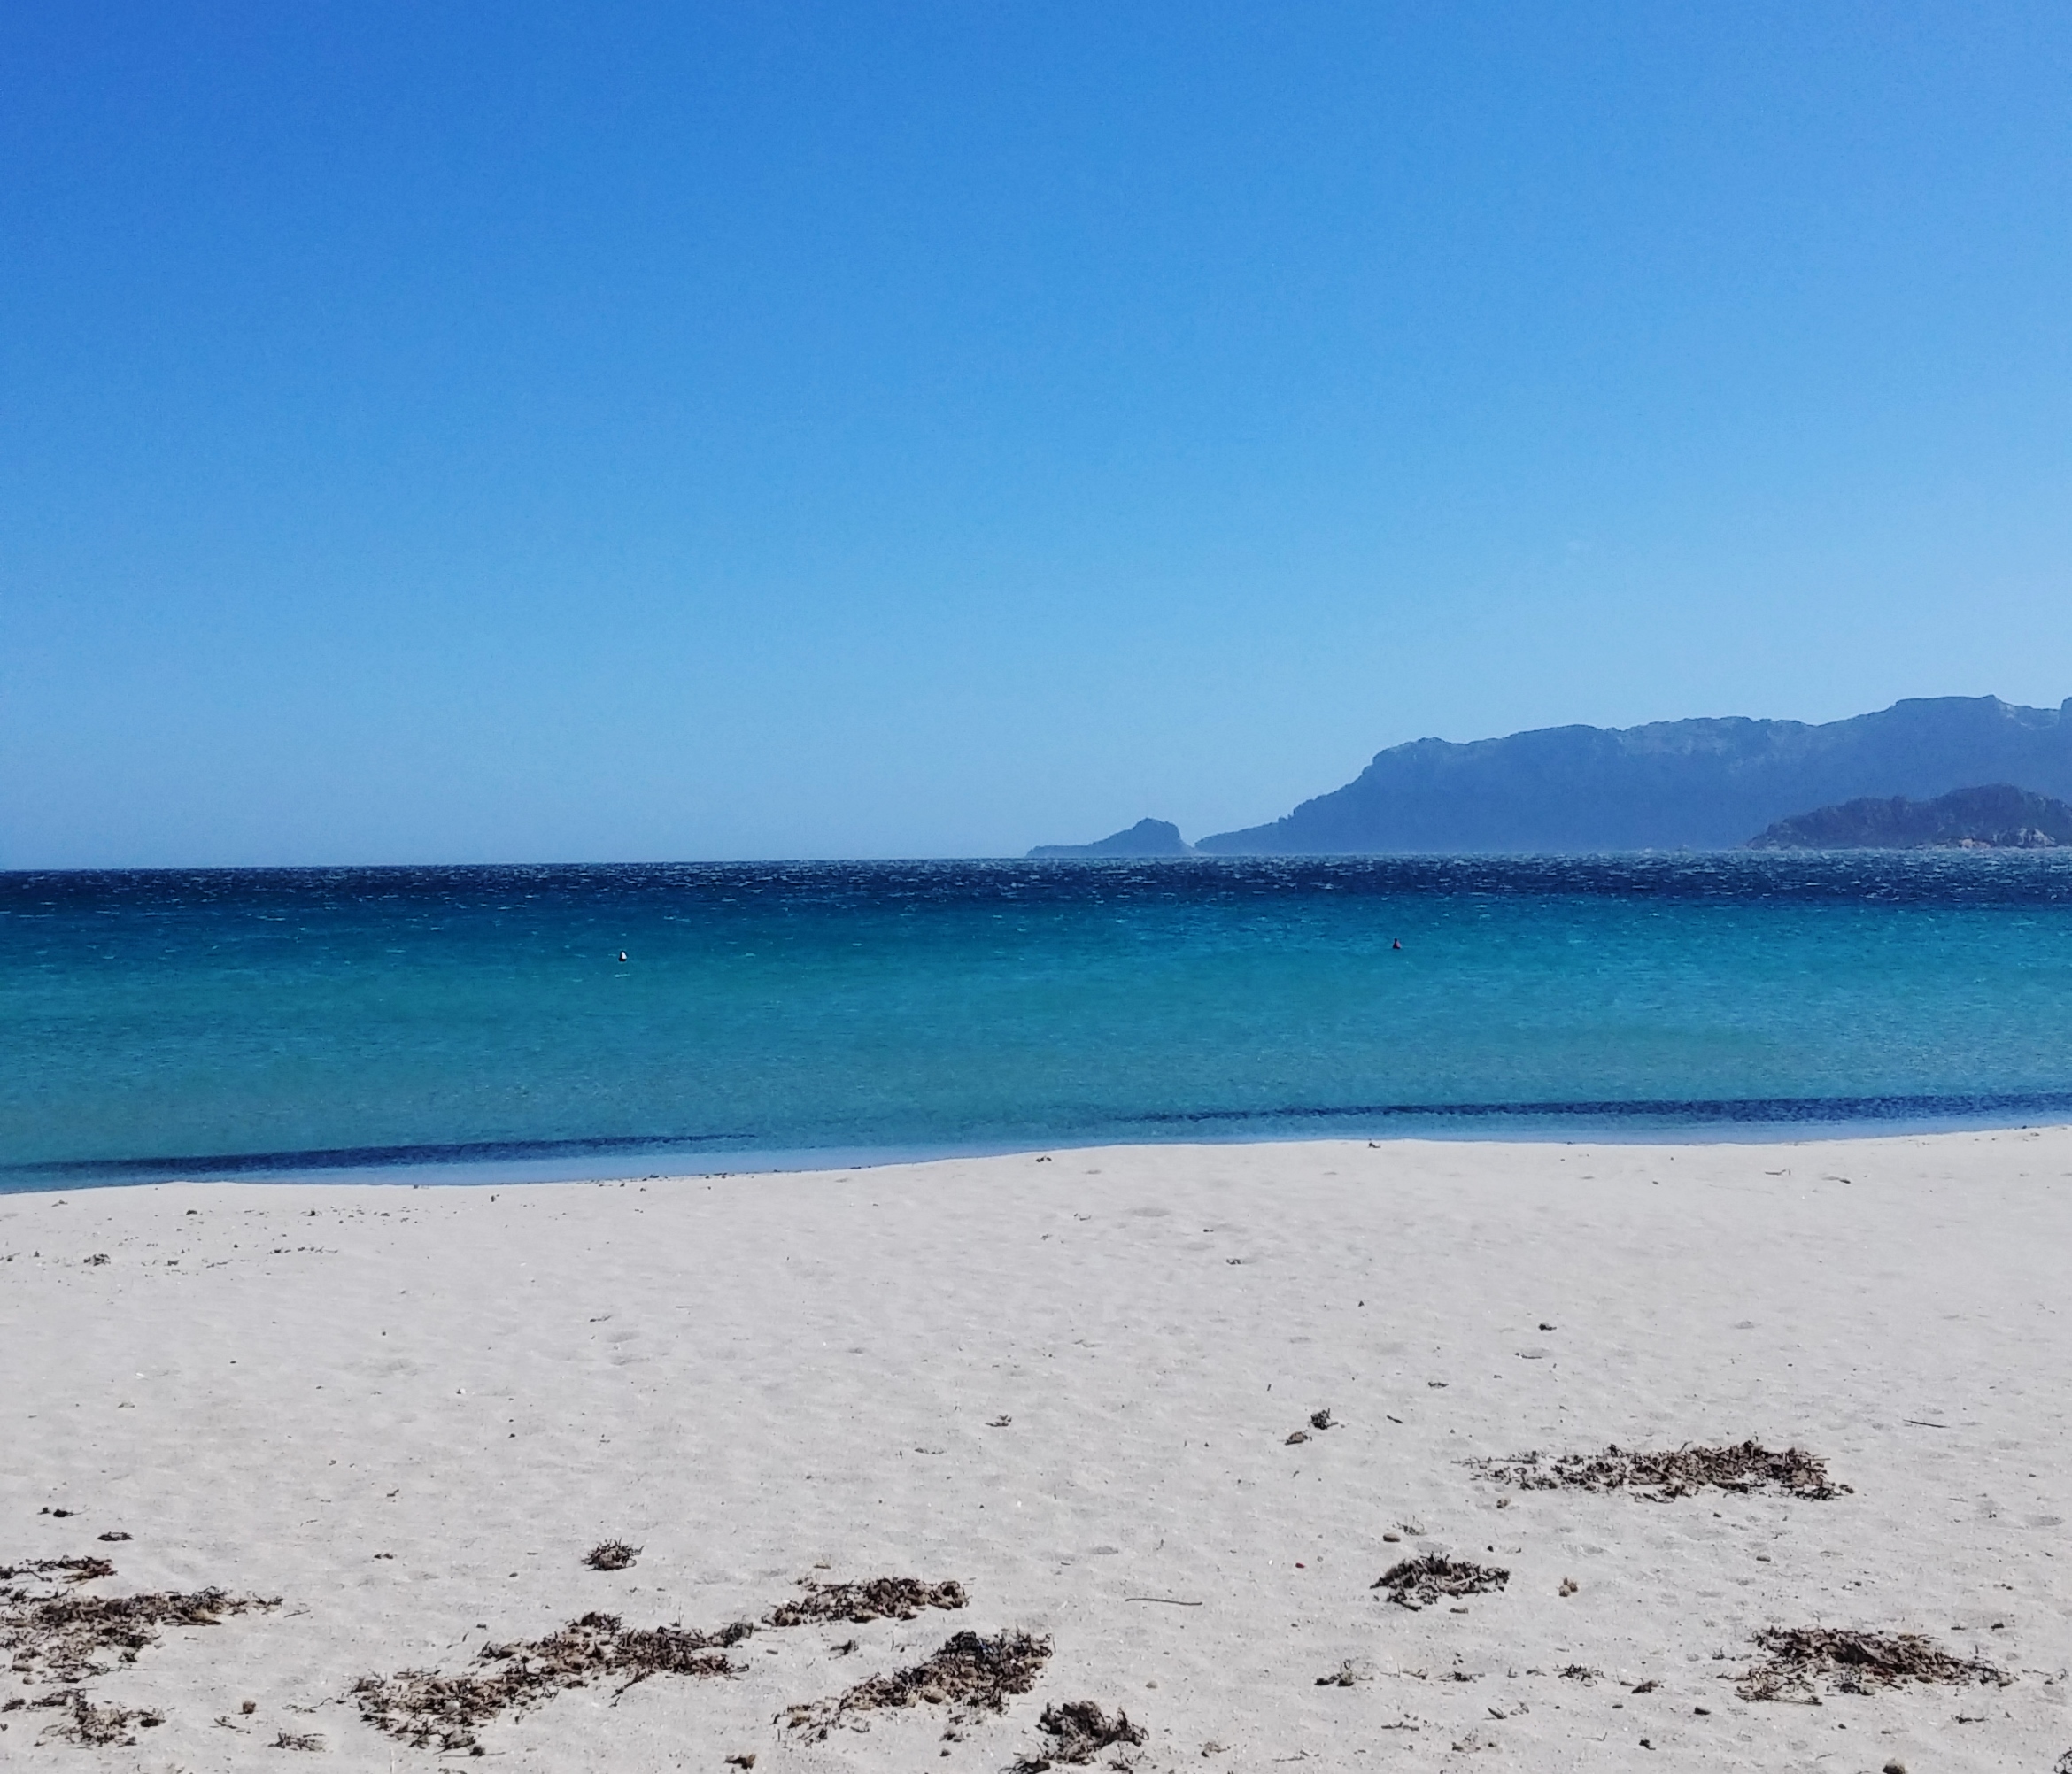 Sardegna, Meteo: caldo in arrivo su tutta l'isola